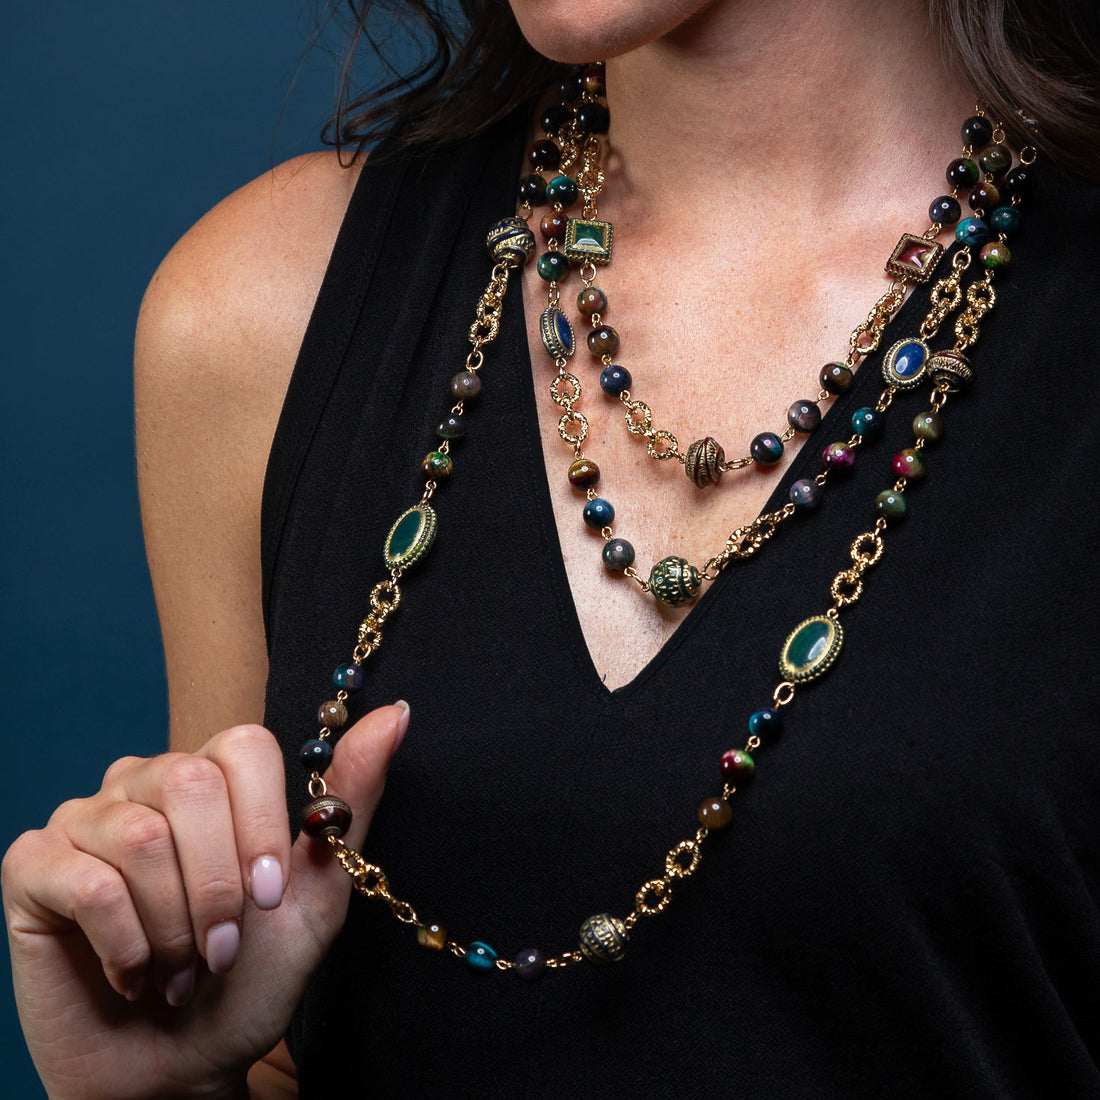 Two-strand choker necklace in semi-precious stones and chain